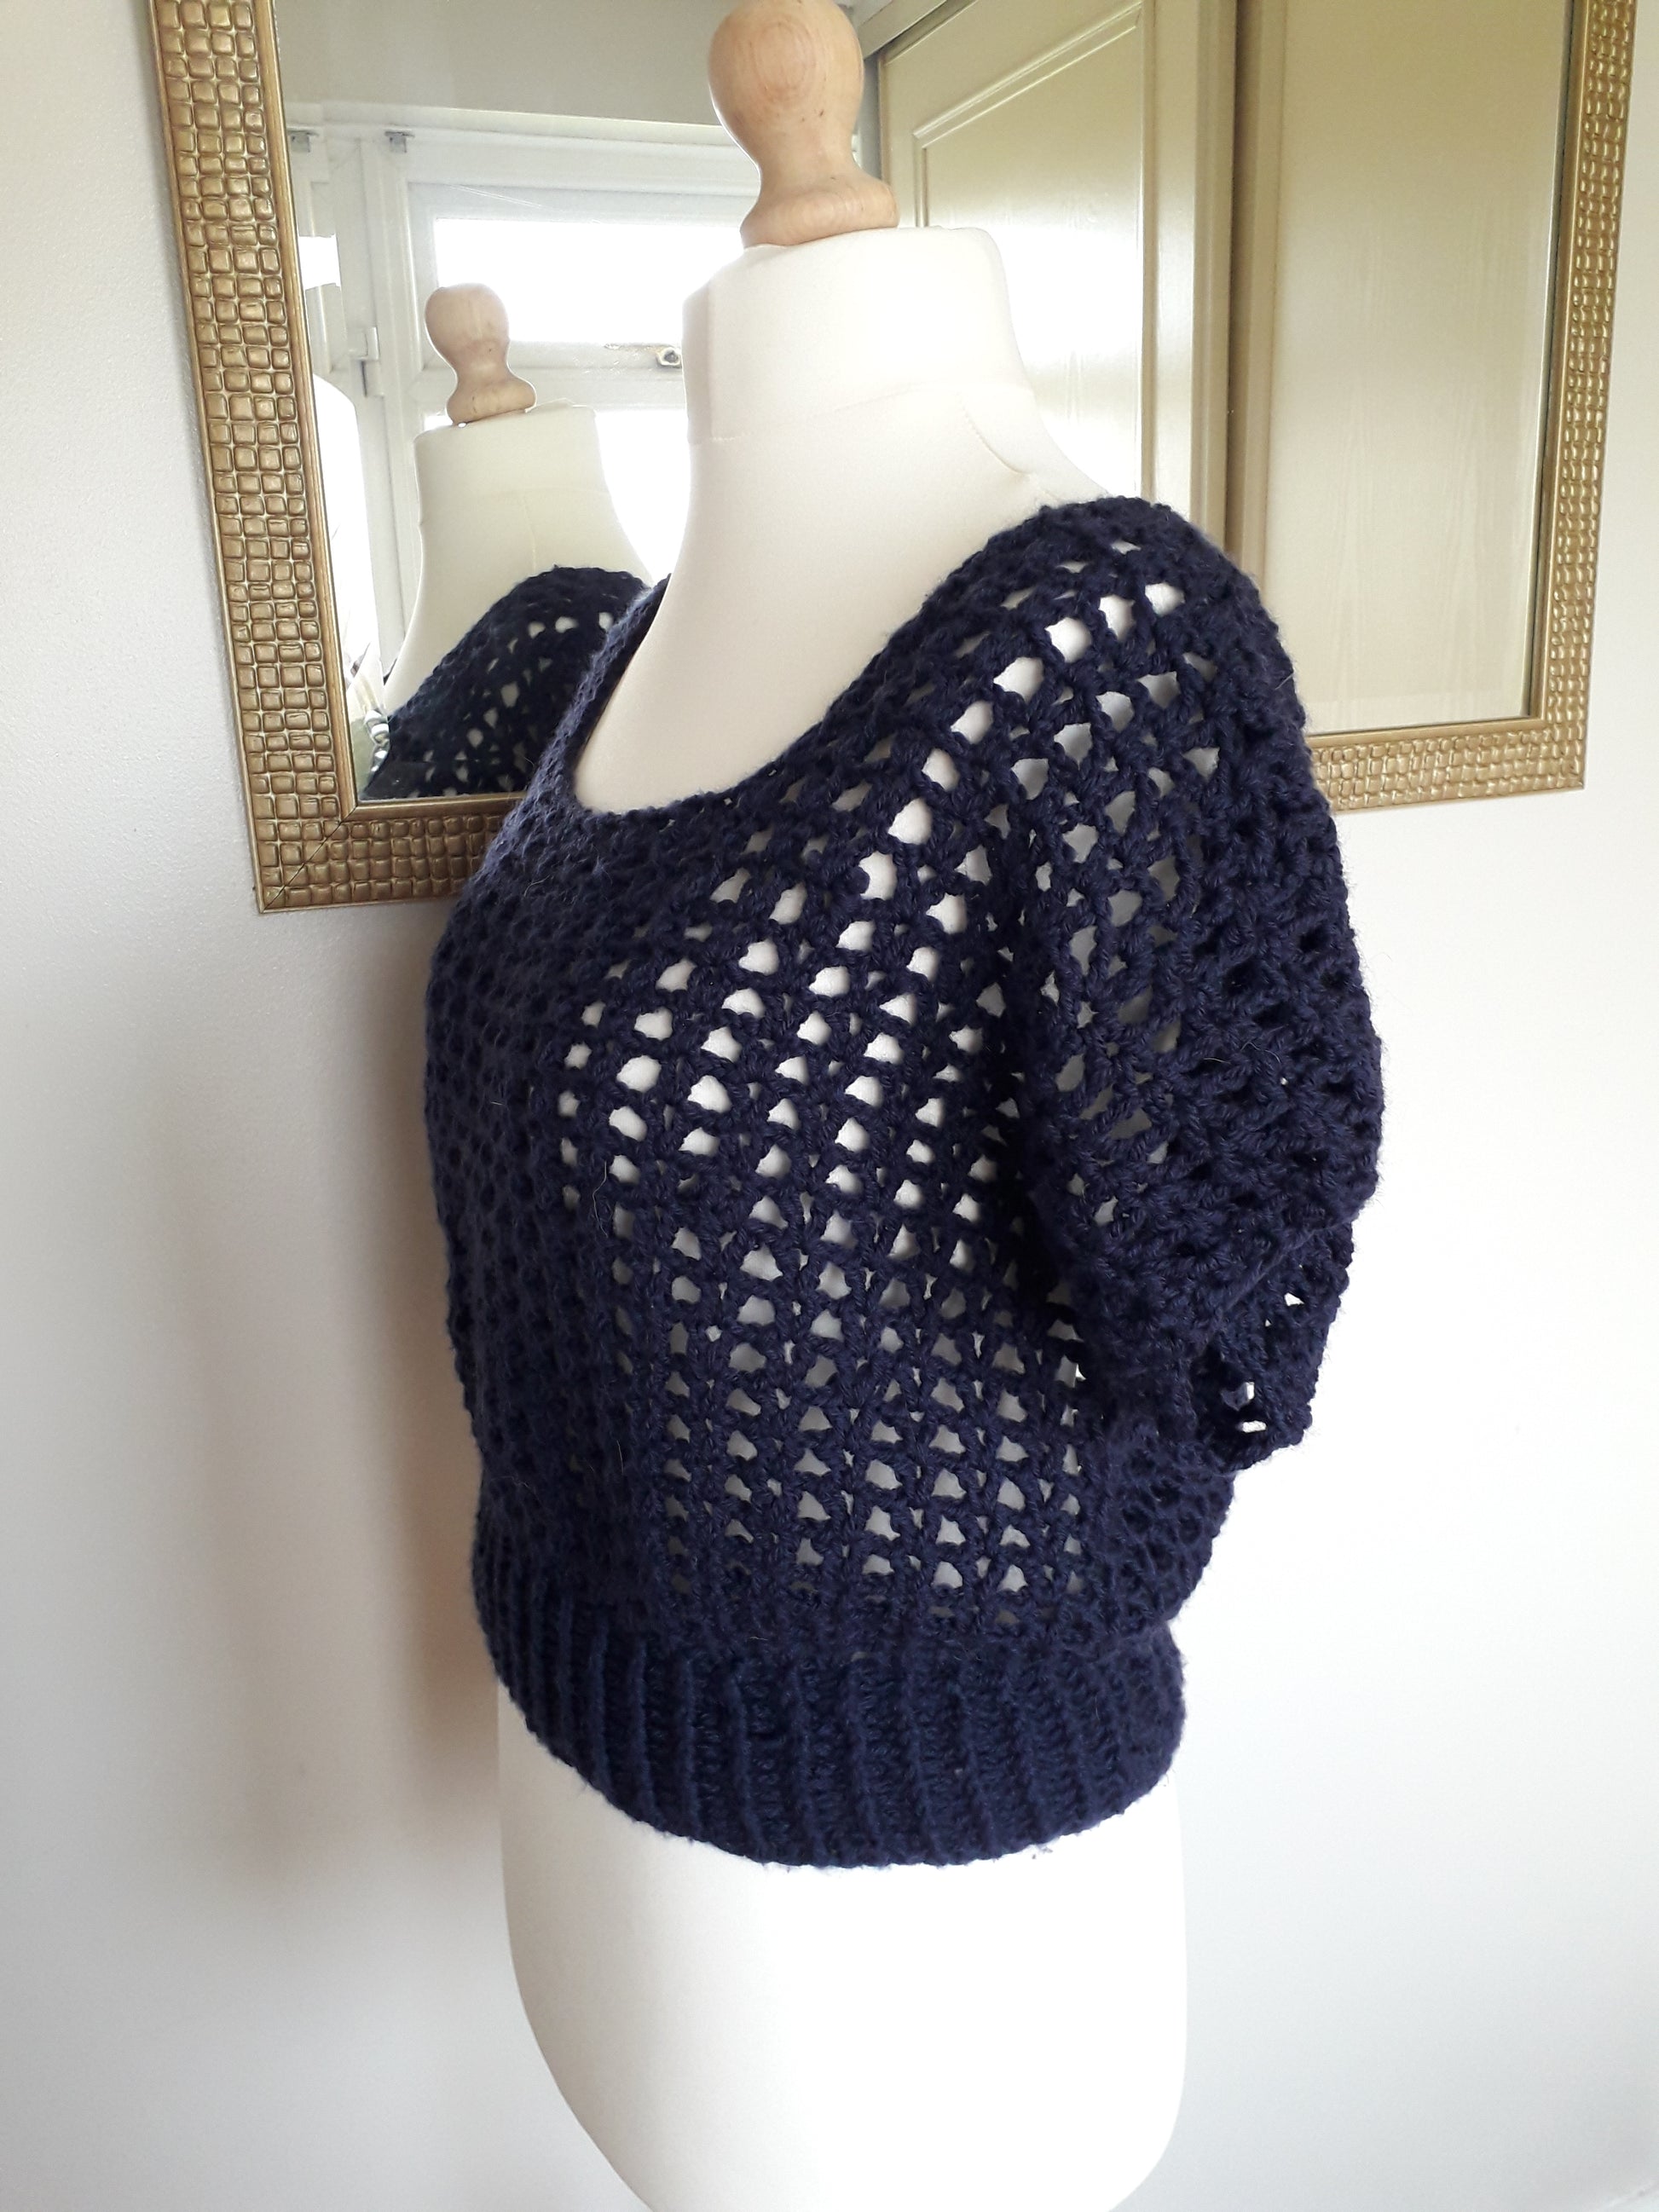 The Vivienne Crochet Top Pattern